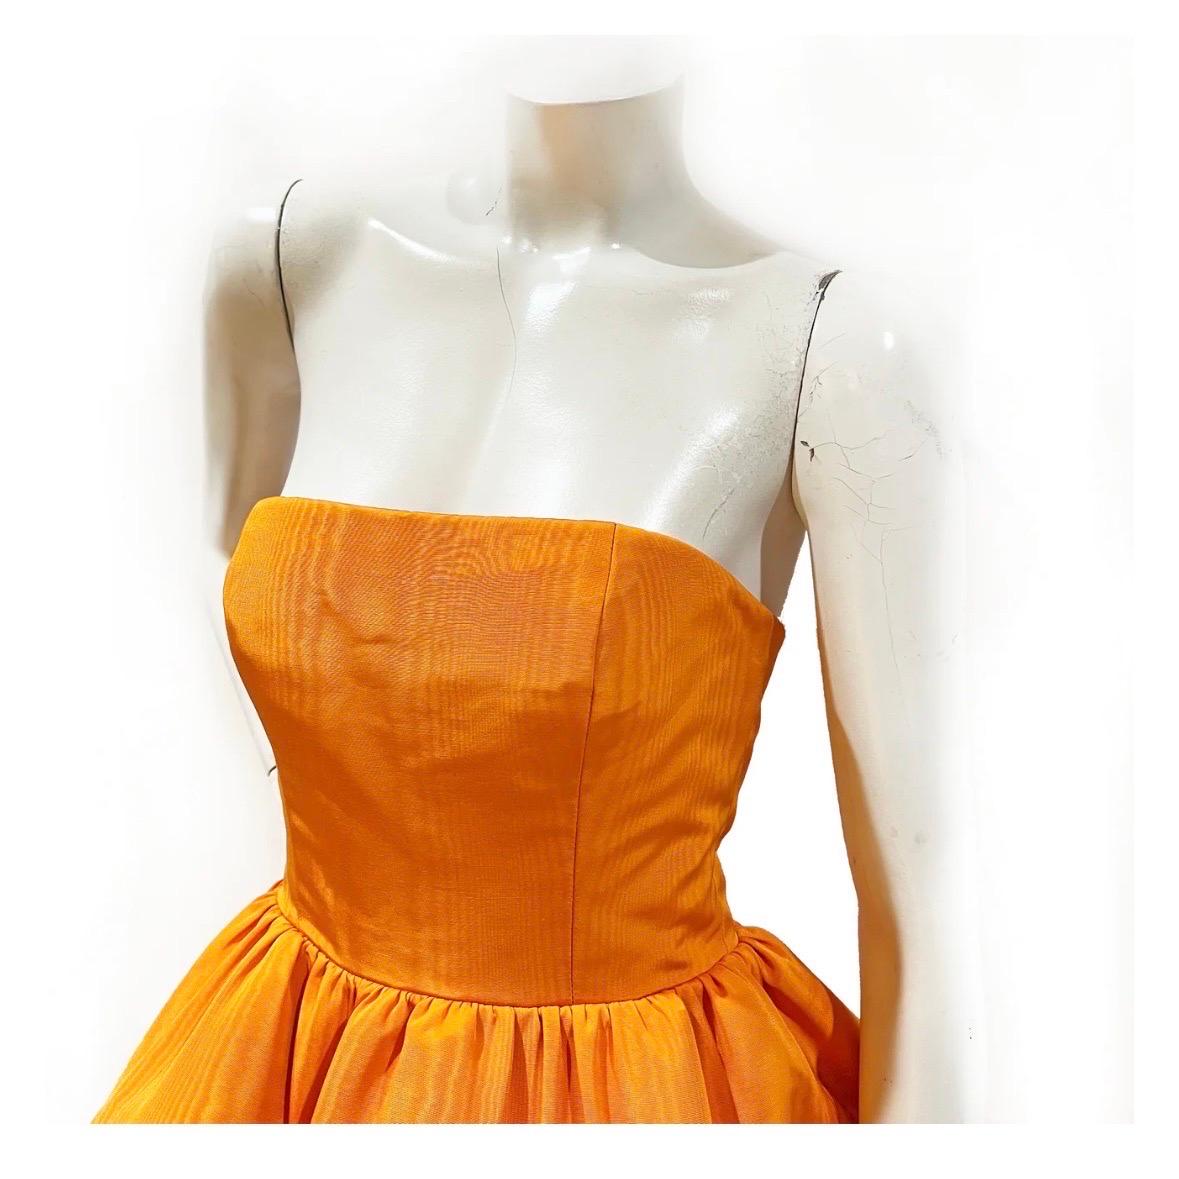 Strapless Flared Mini Dress by Oscar de la Renta 
Spring 2022 Ready-to-Wear
Made in Italy
Bright orange (